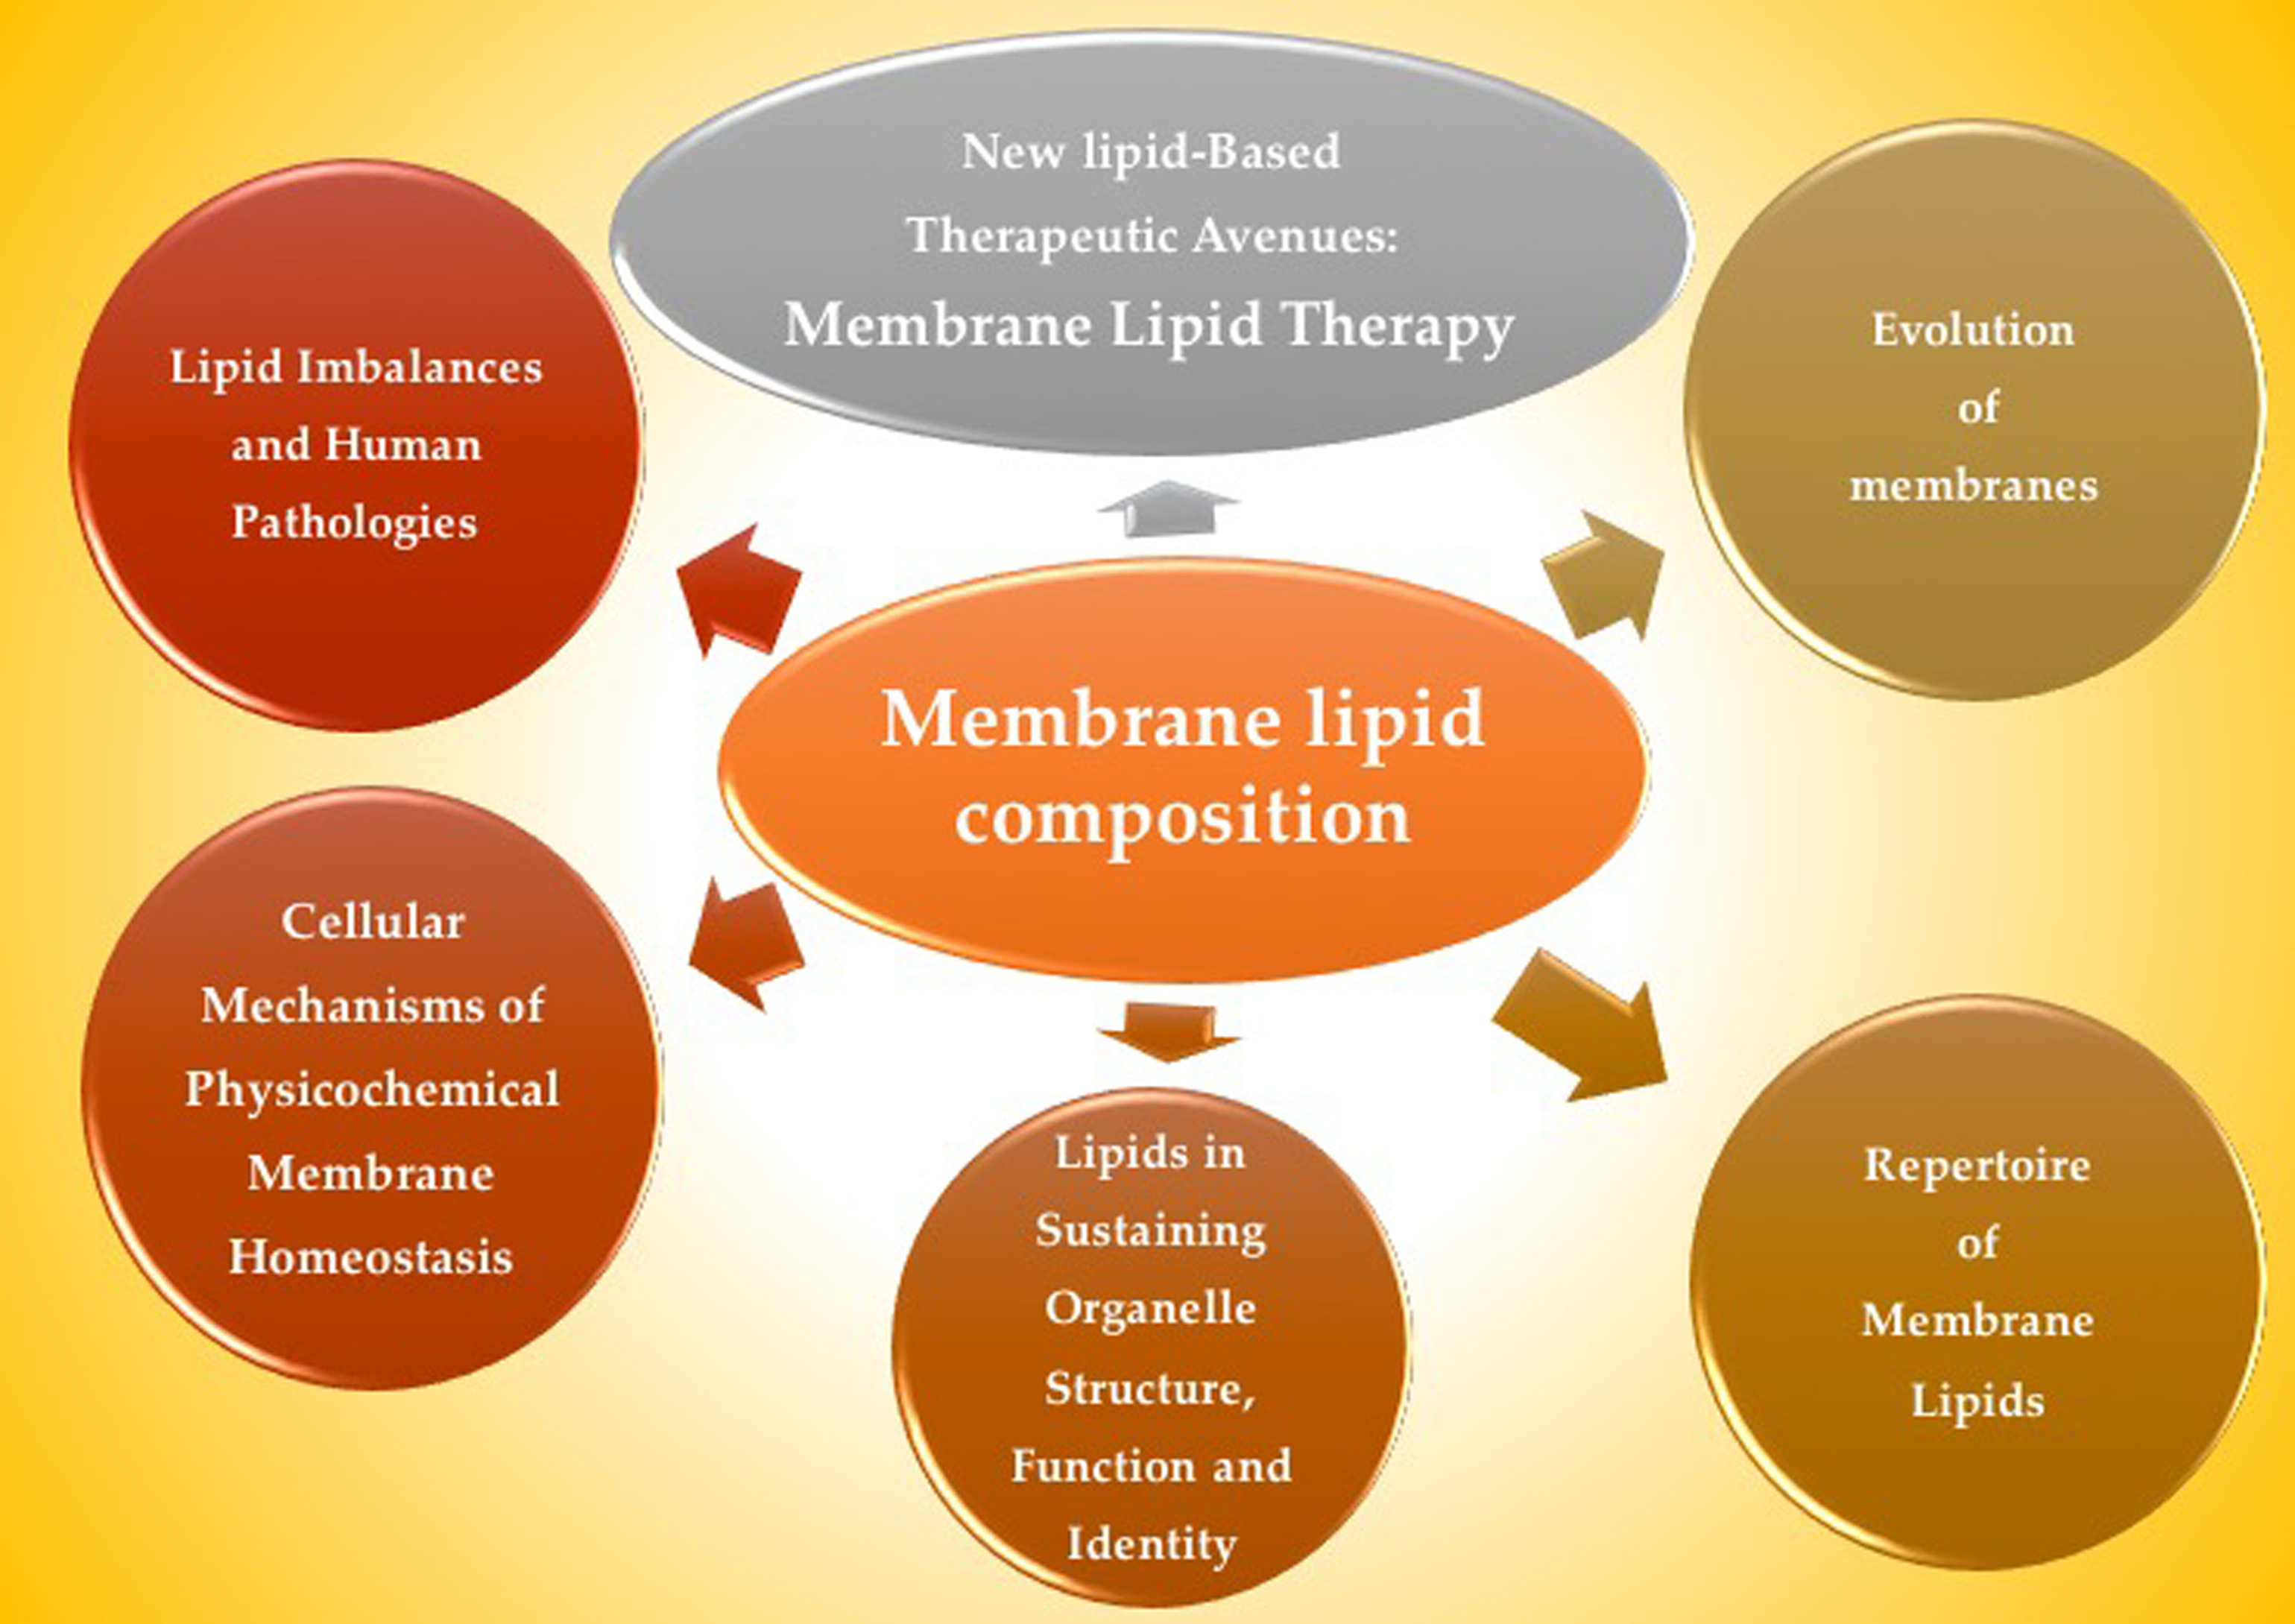 Membrane Lipid Composition